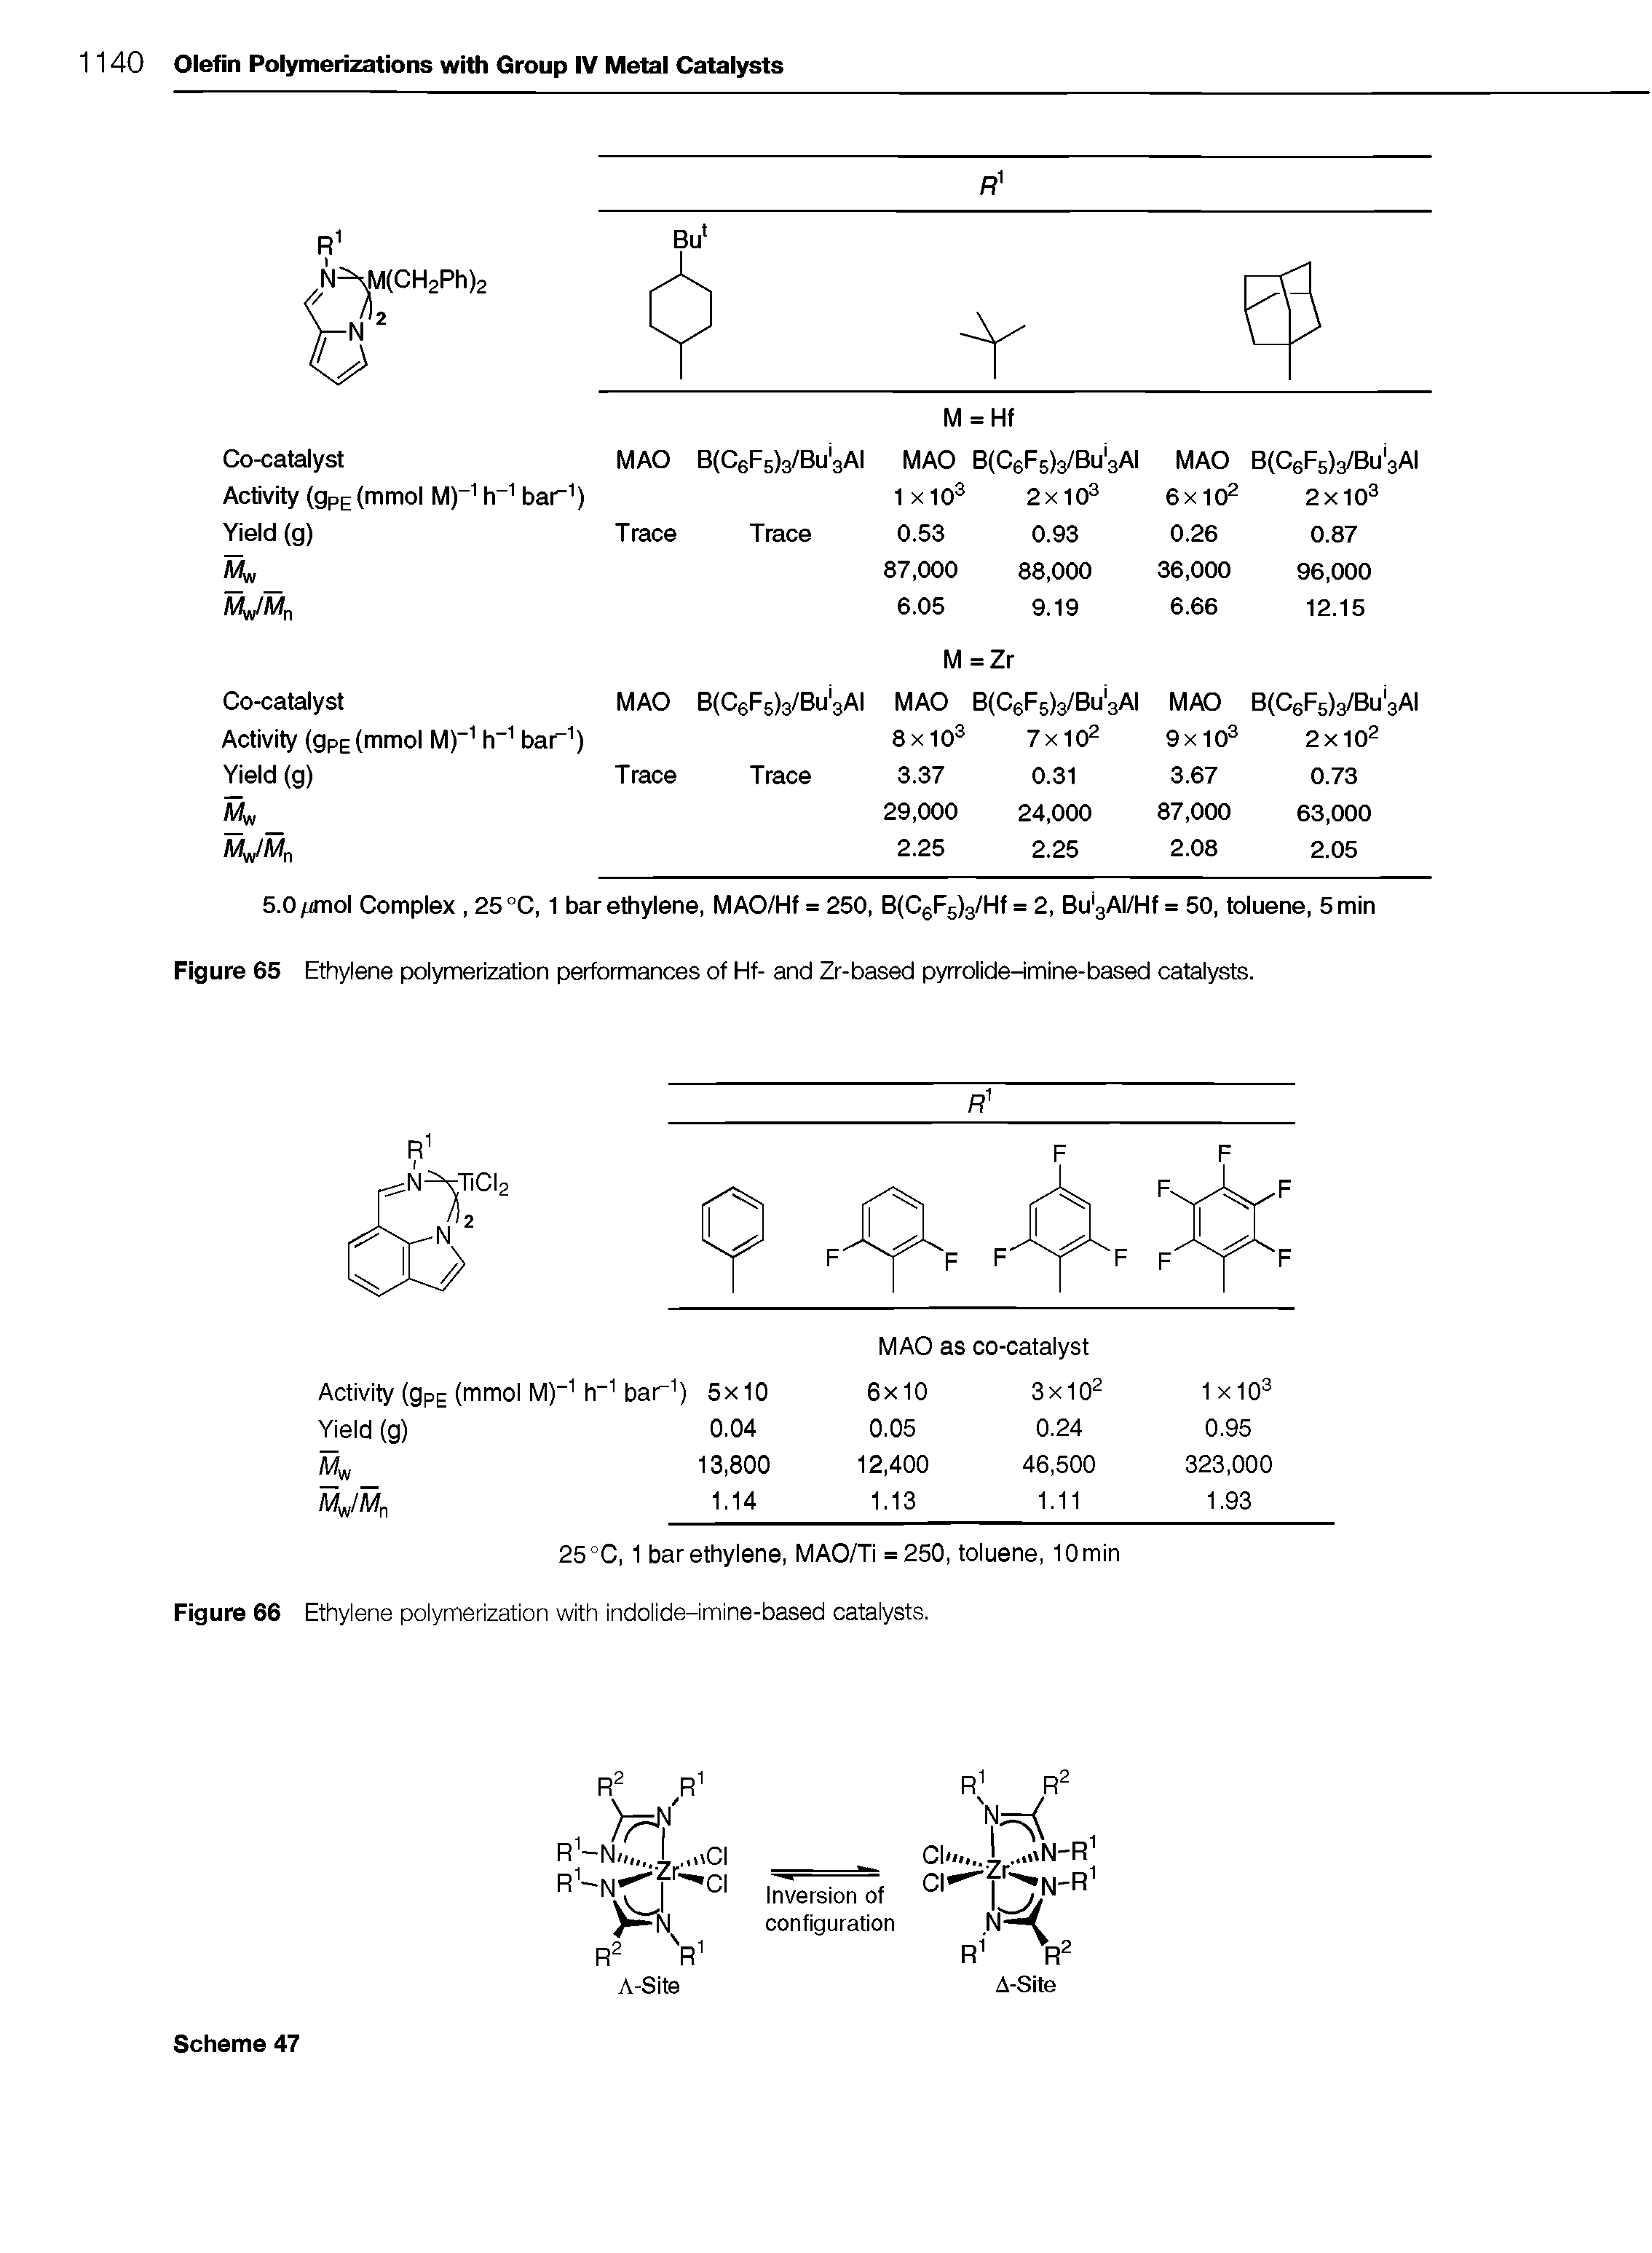 Figure 65 Ethylene polymerization performances of Hf- and Zr-based pyrrolide-imine-based catalysts.